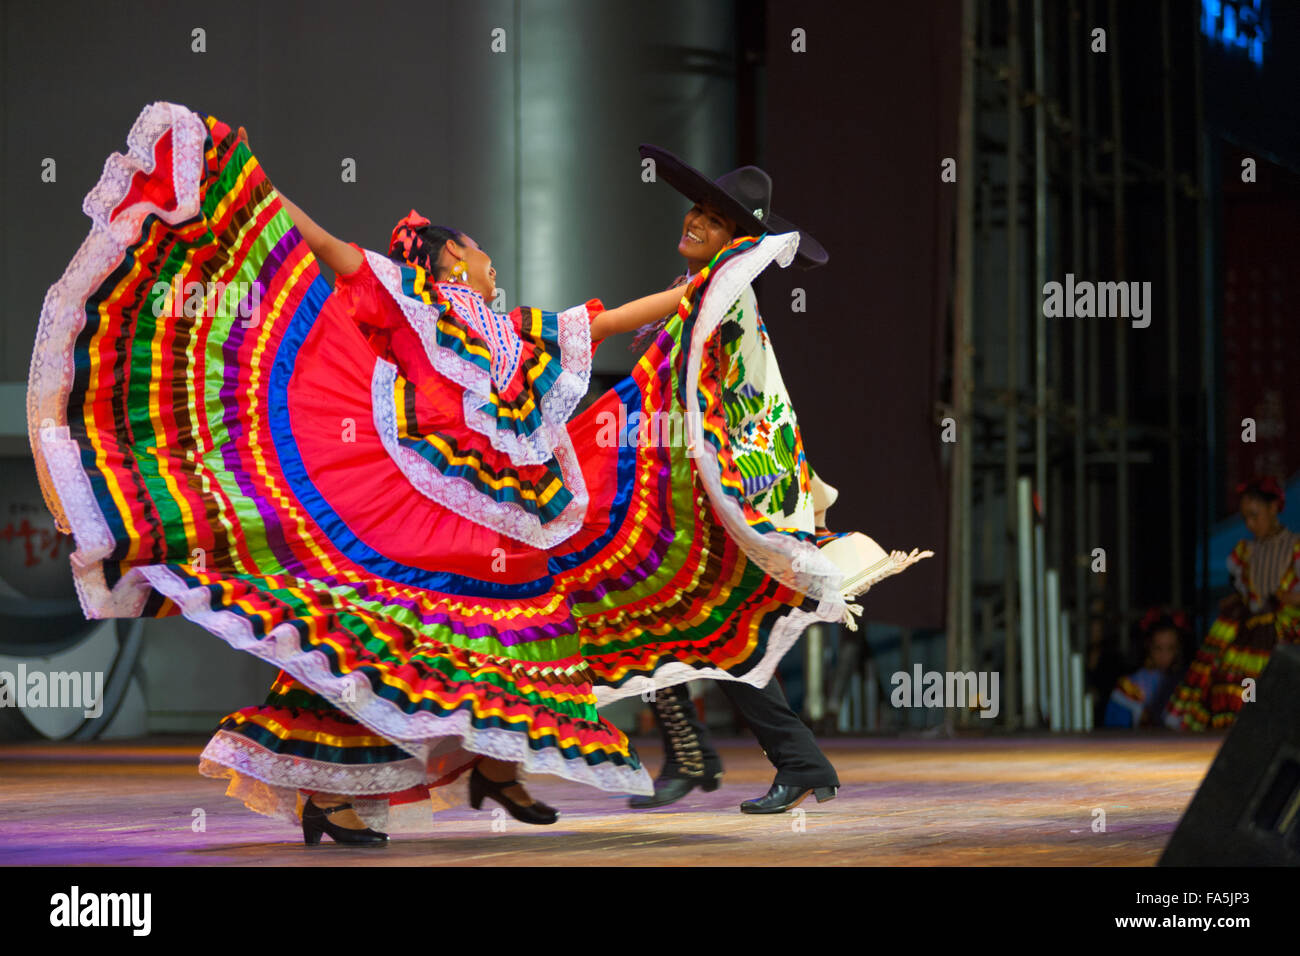 Jalisco dress fotografías e imágenes de alta resolución - Alamy